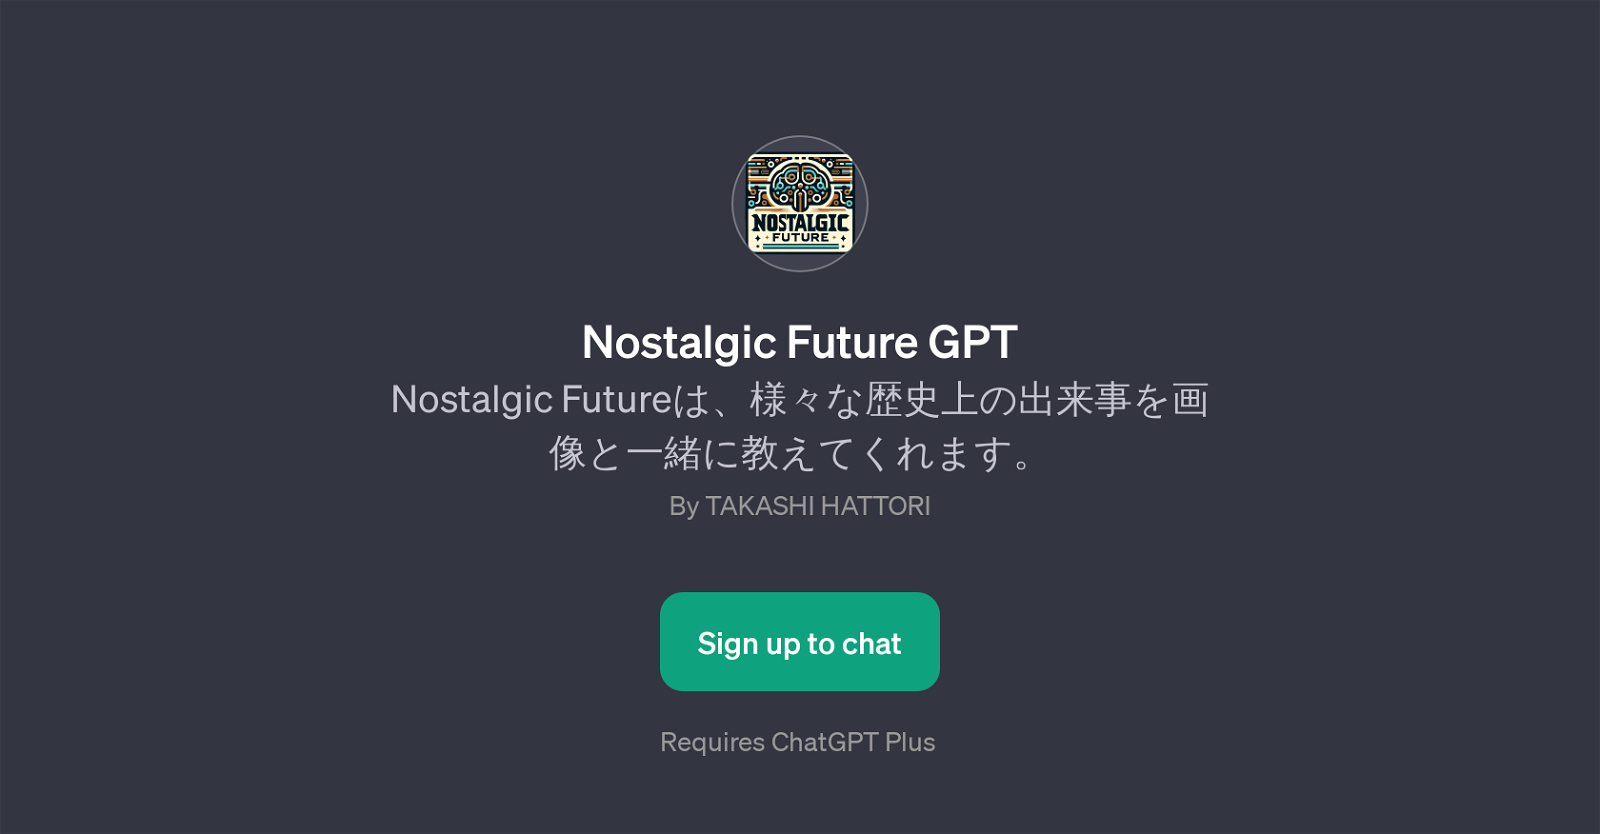 Nostalgic Future GPT website